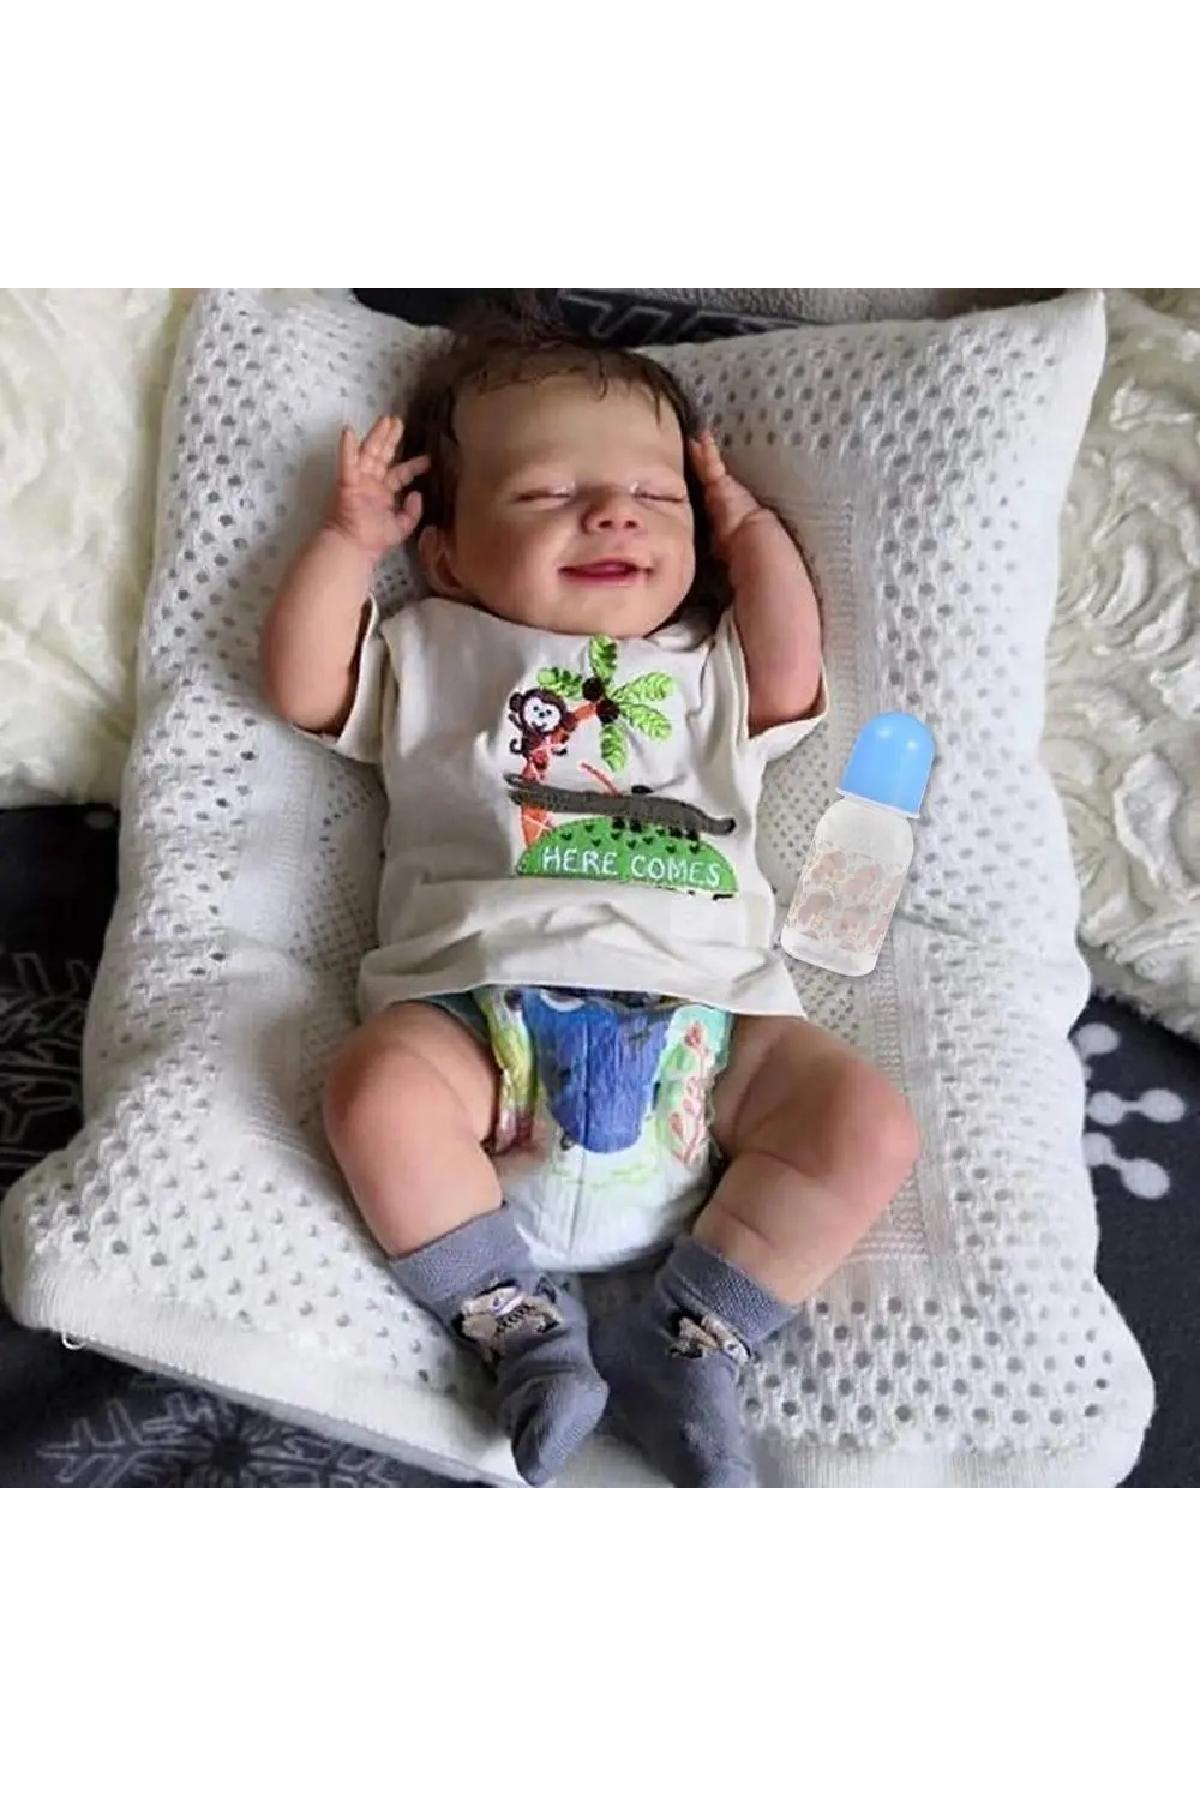 عروسک سیلیکونی نوزاد 1 ساله پسر کد.1033